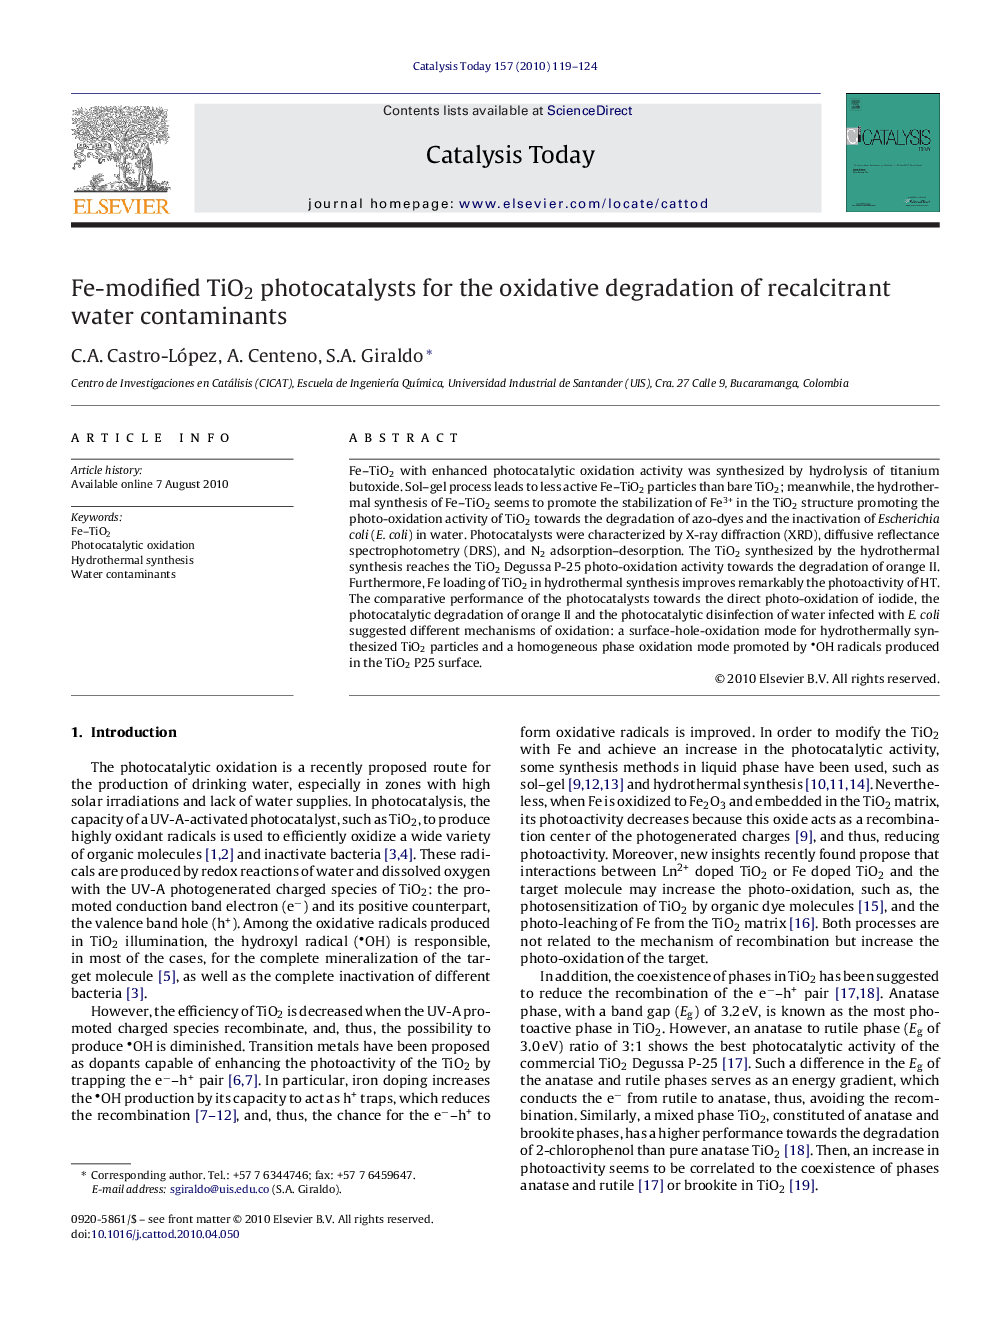 Fe-modified TiO2 photocatalysts for the oxidative degradation of recalcitrant water contaminants